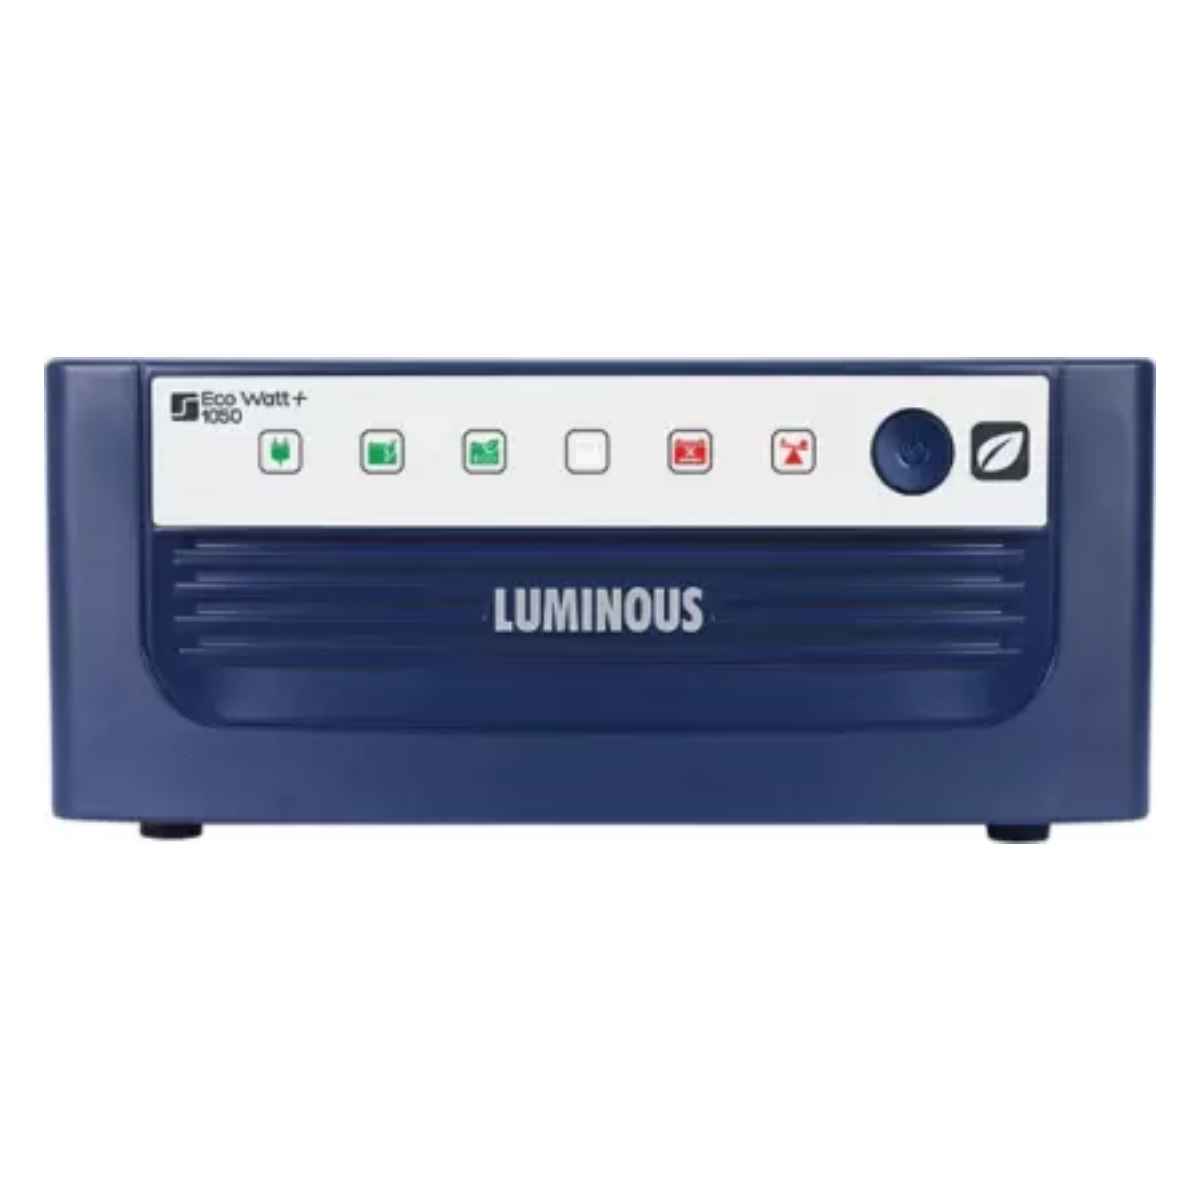 LUMINOUS Eco Watt +1050 Square wave Inverter